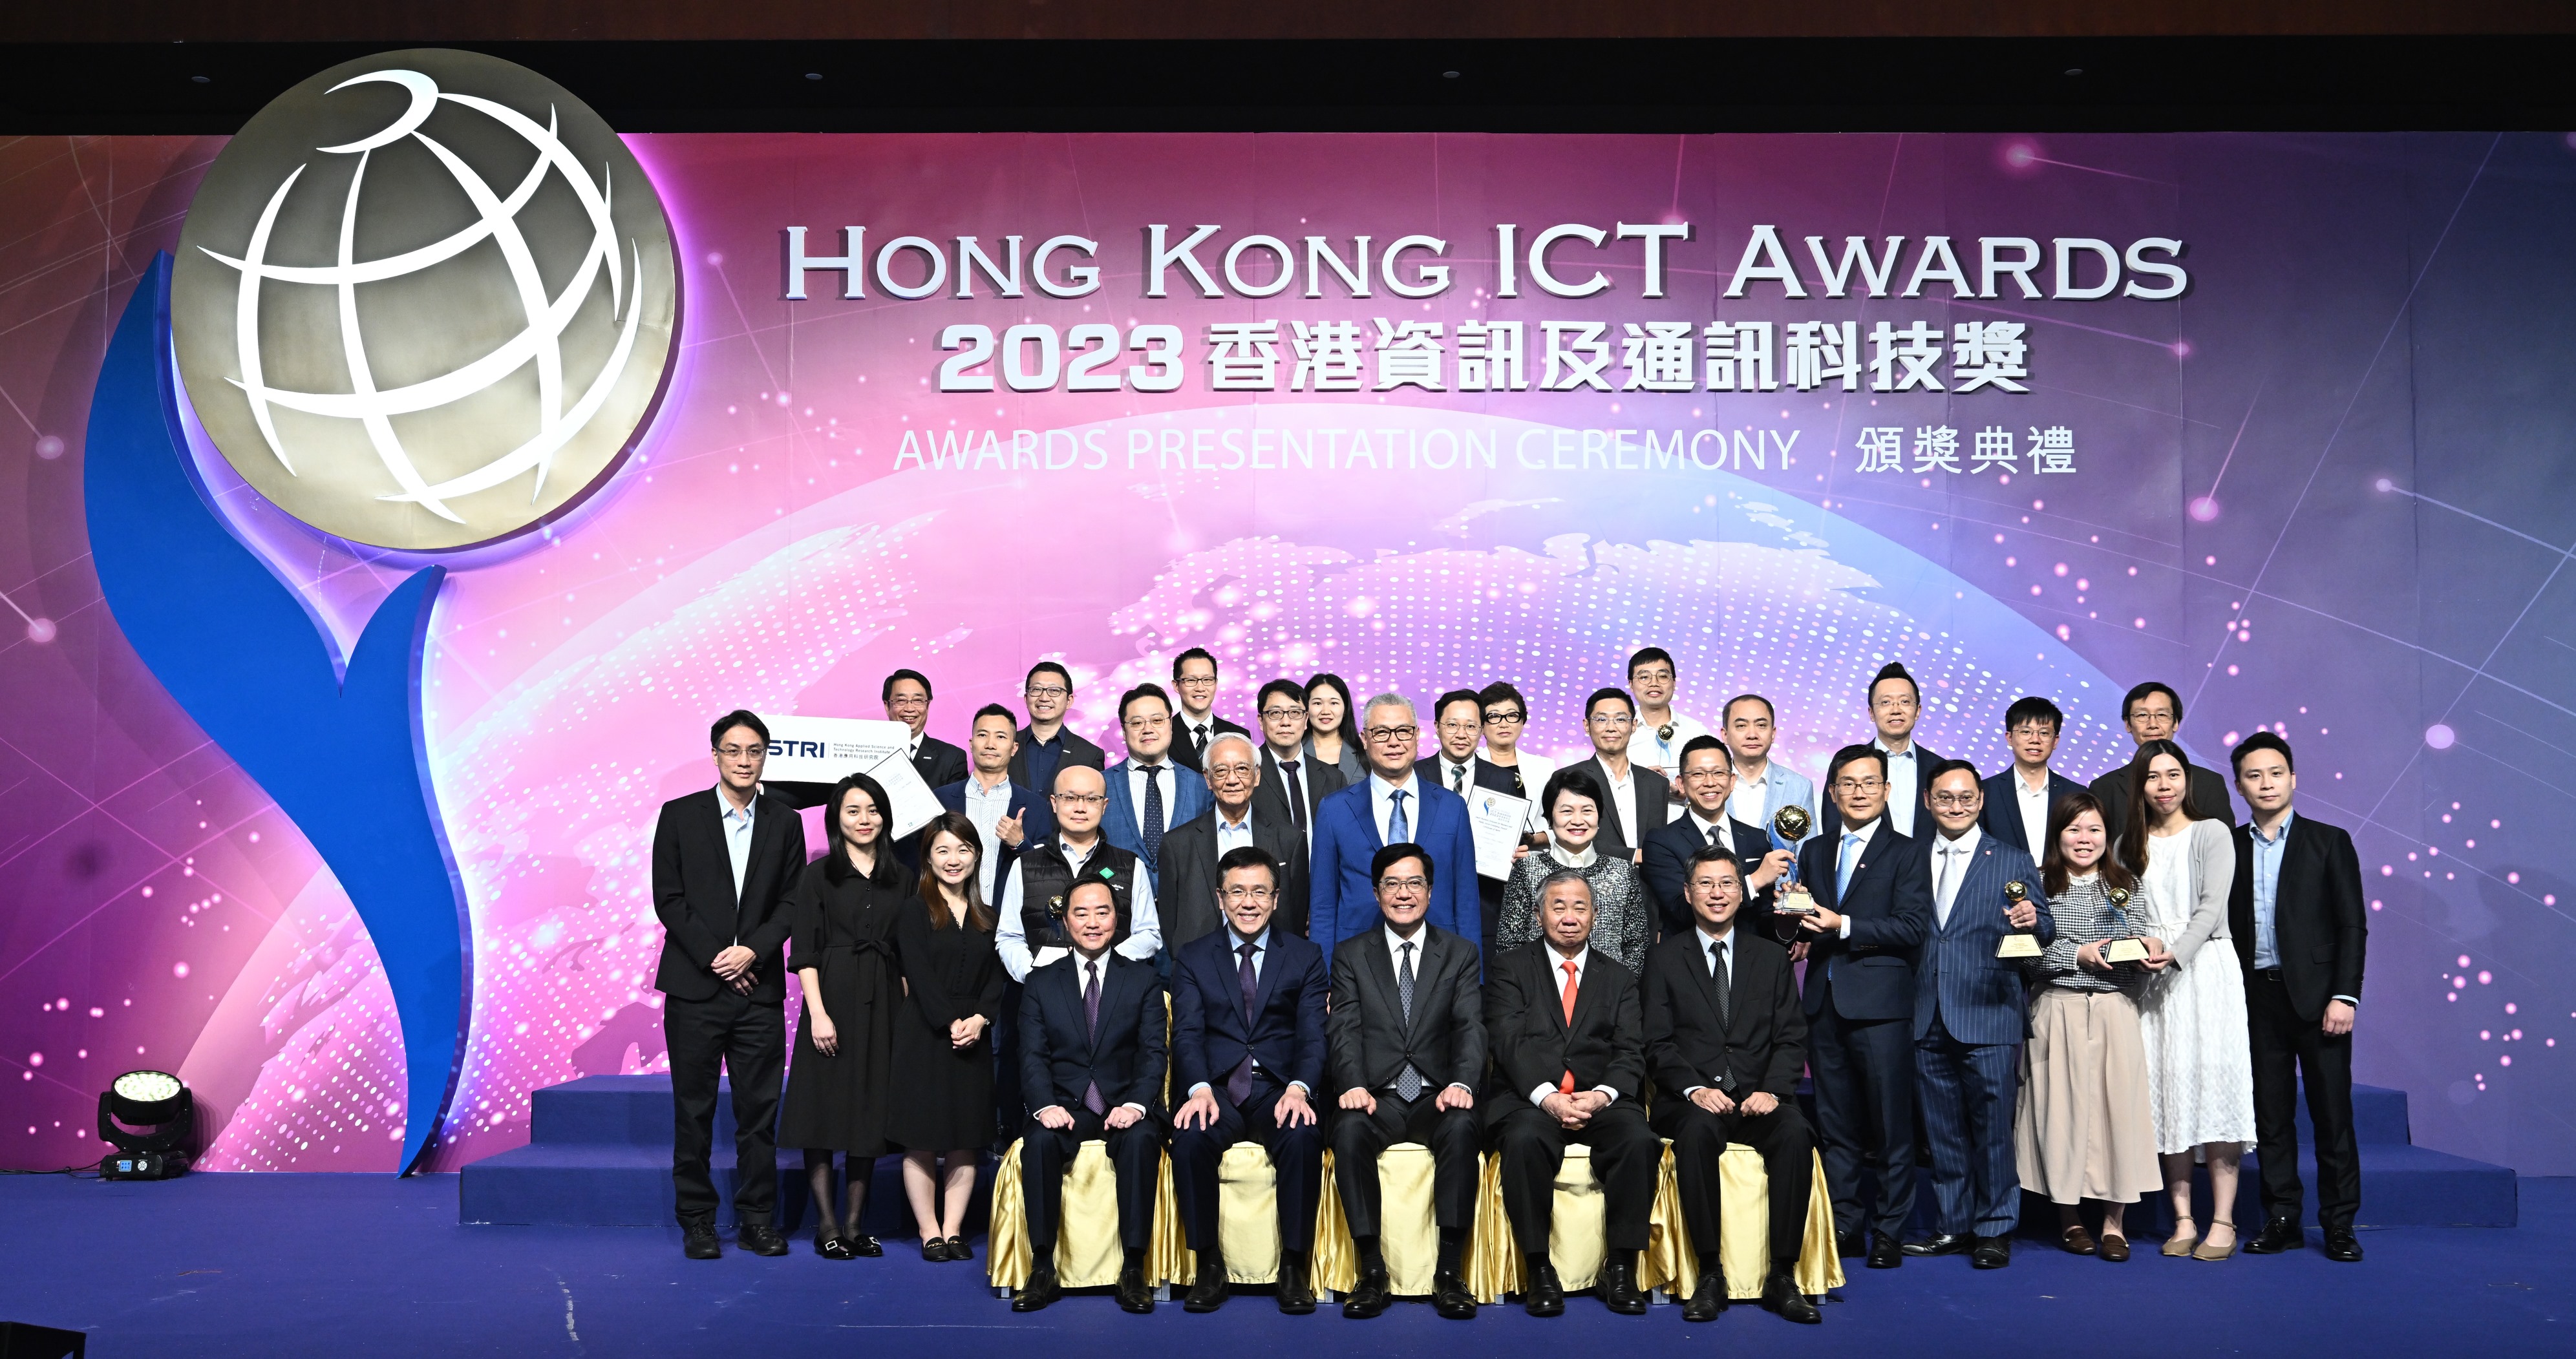 Hong Kong ICT Awards 2023 Smart Business Award Winners Group Photo